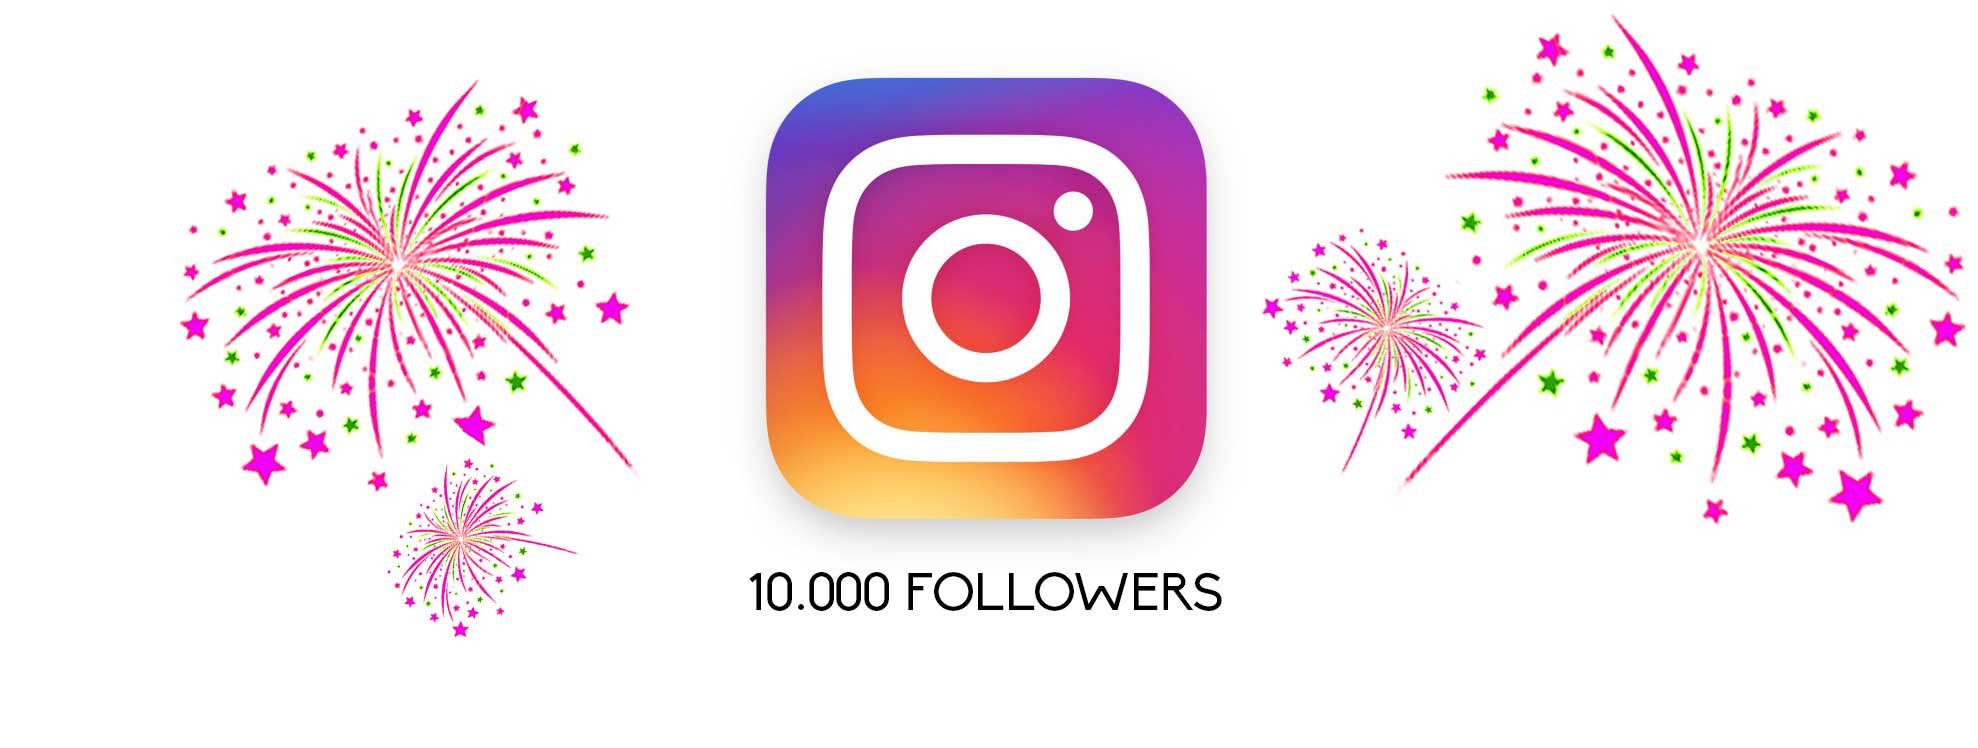 Slyde Handboards Hits an Instagram Milestone 10,000 Followers